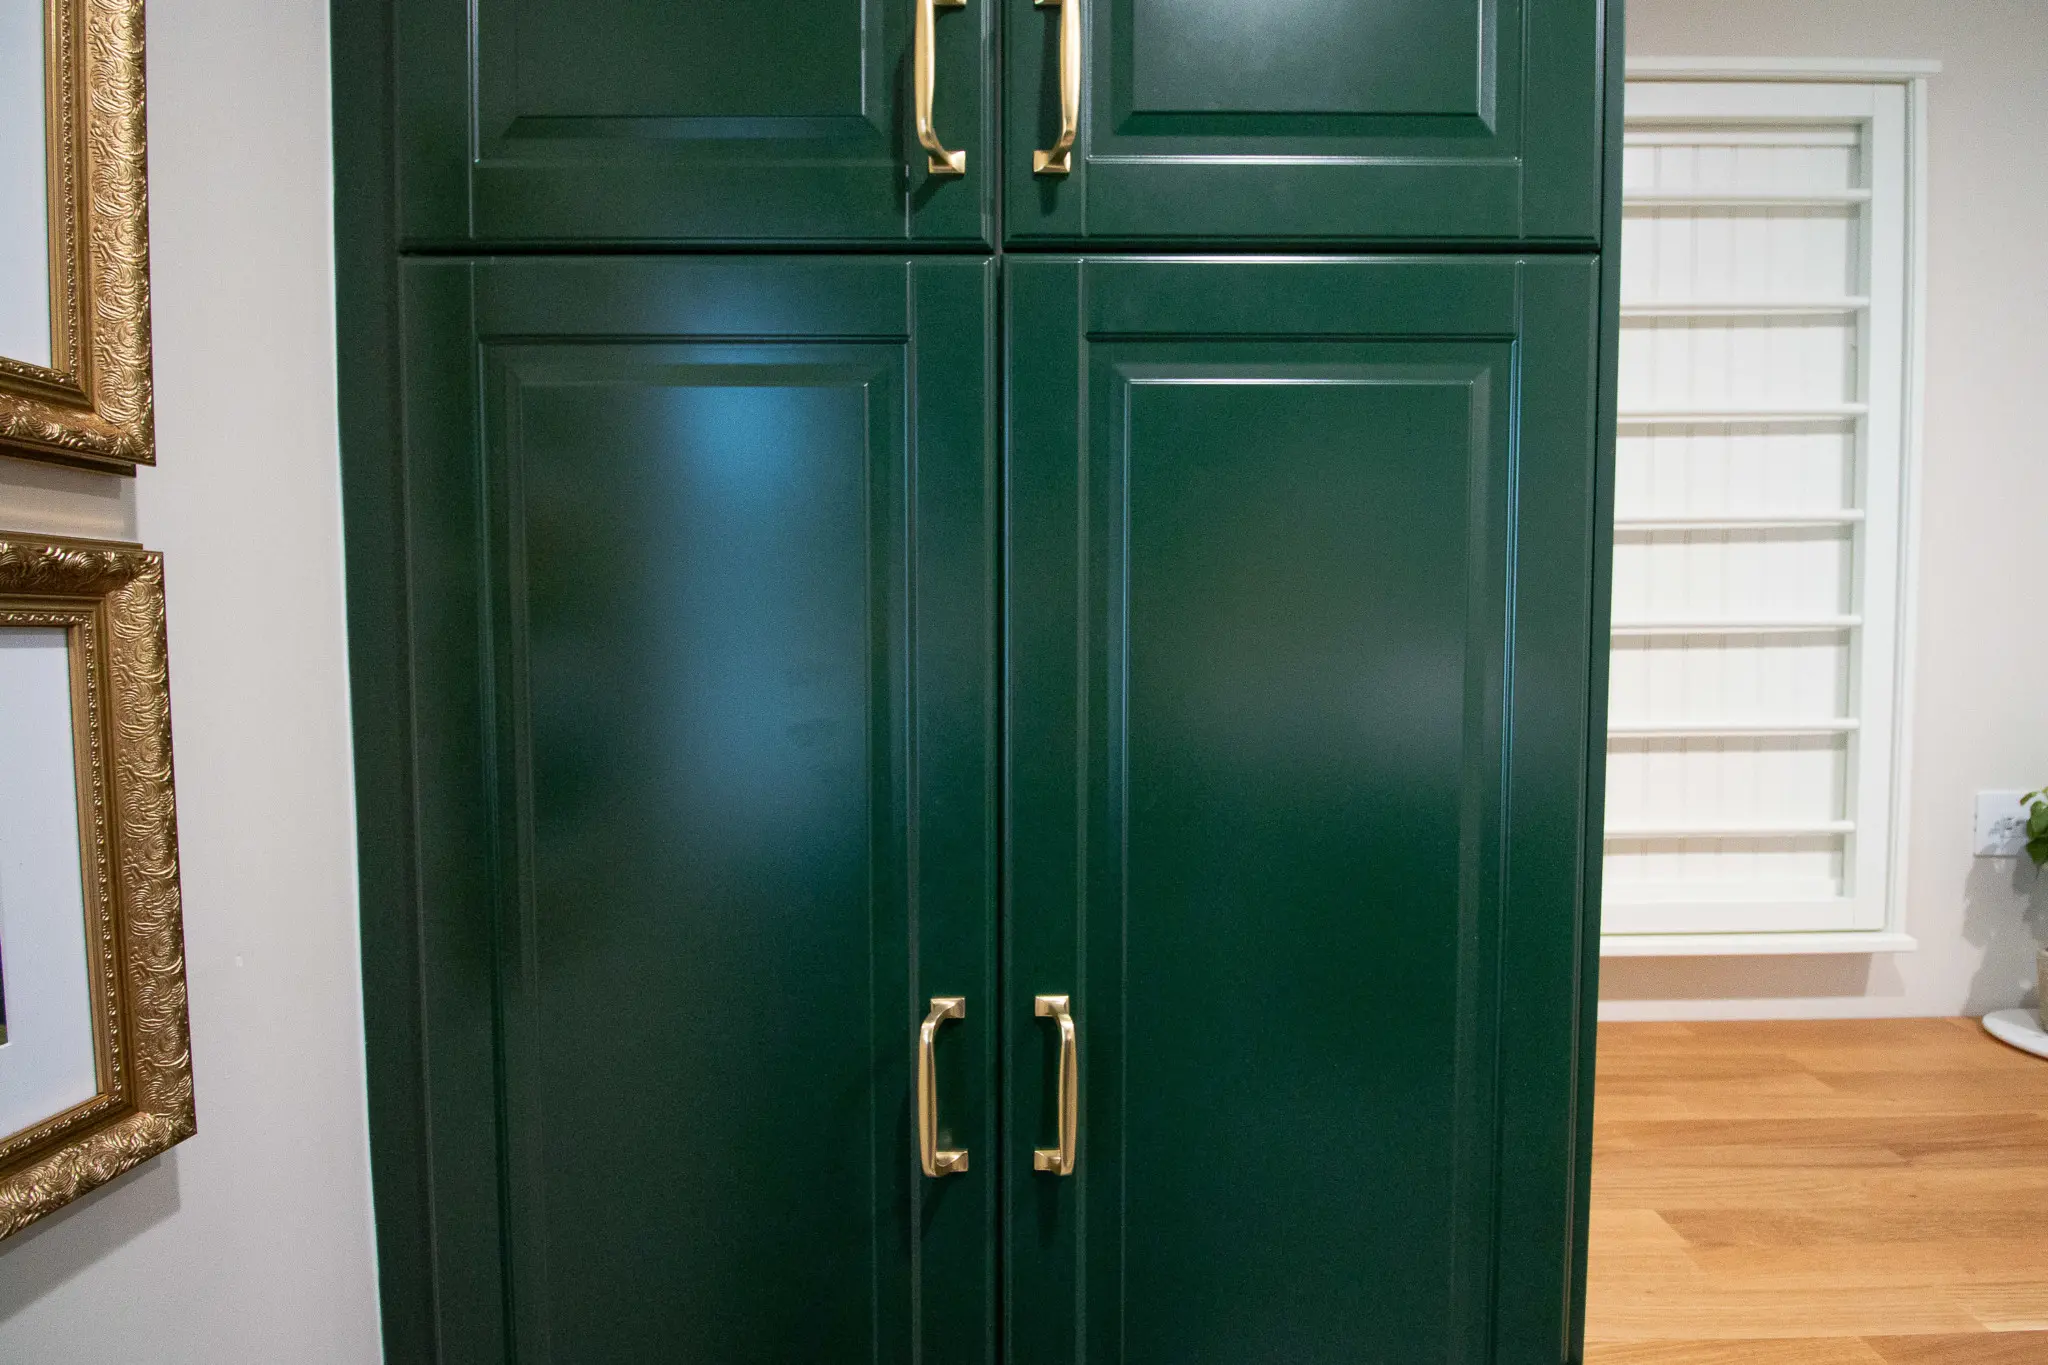 Dark green kitchen cabinets from IKEA